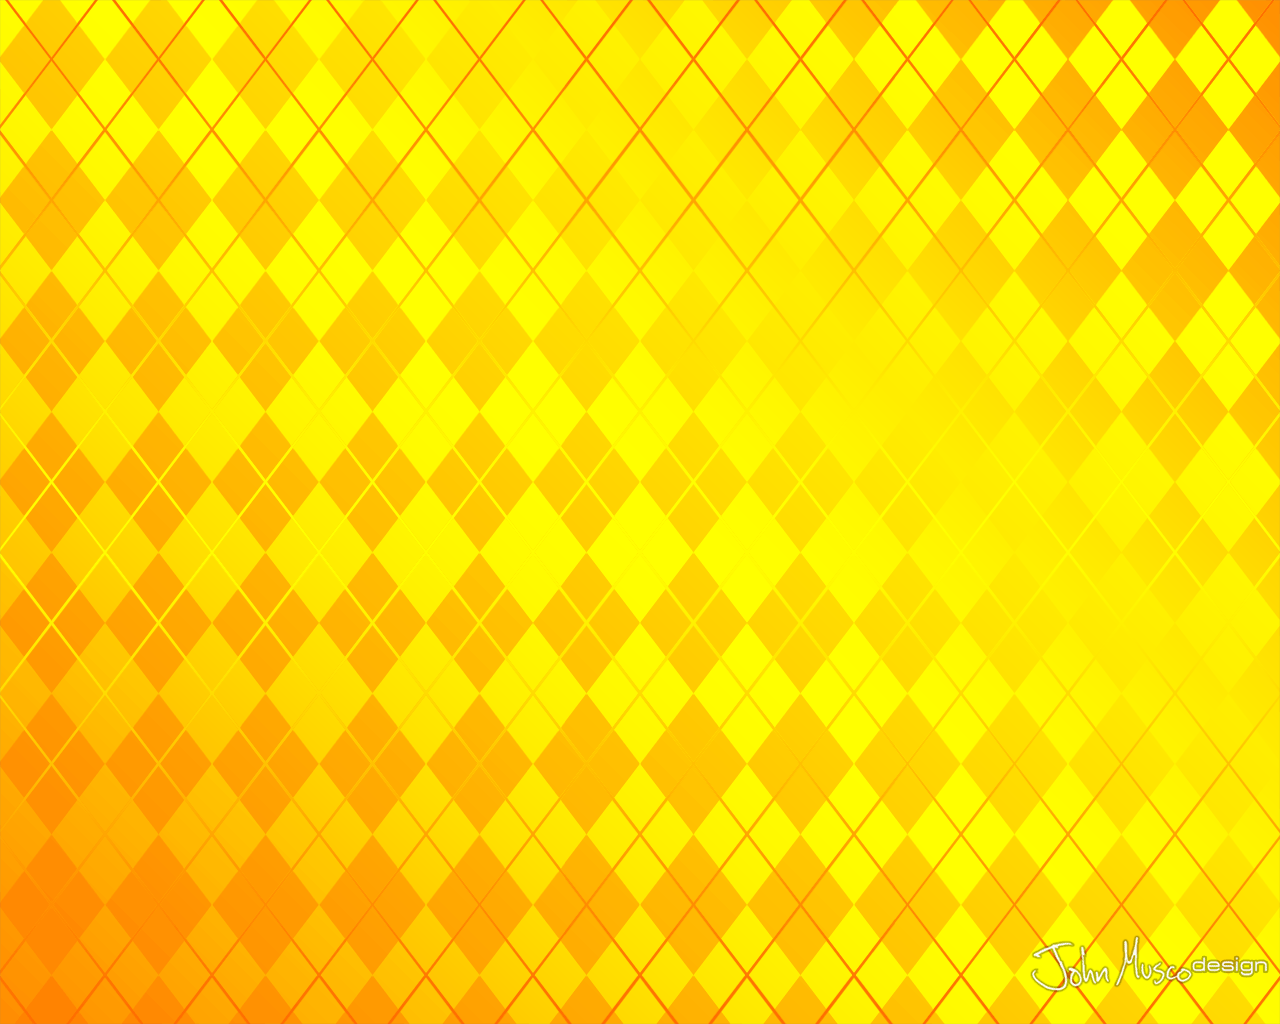 74+] Yellow Background Image - WallpaperSafari